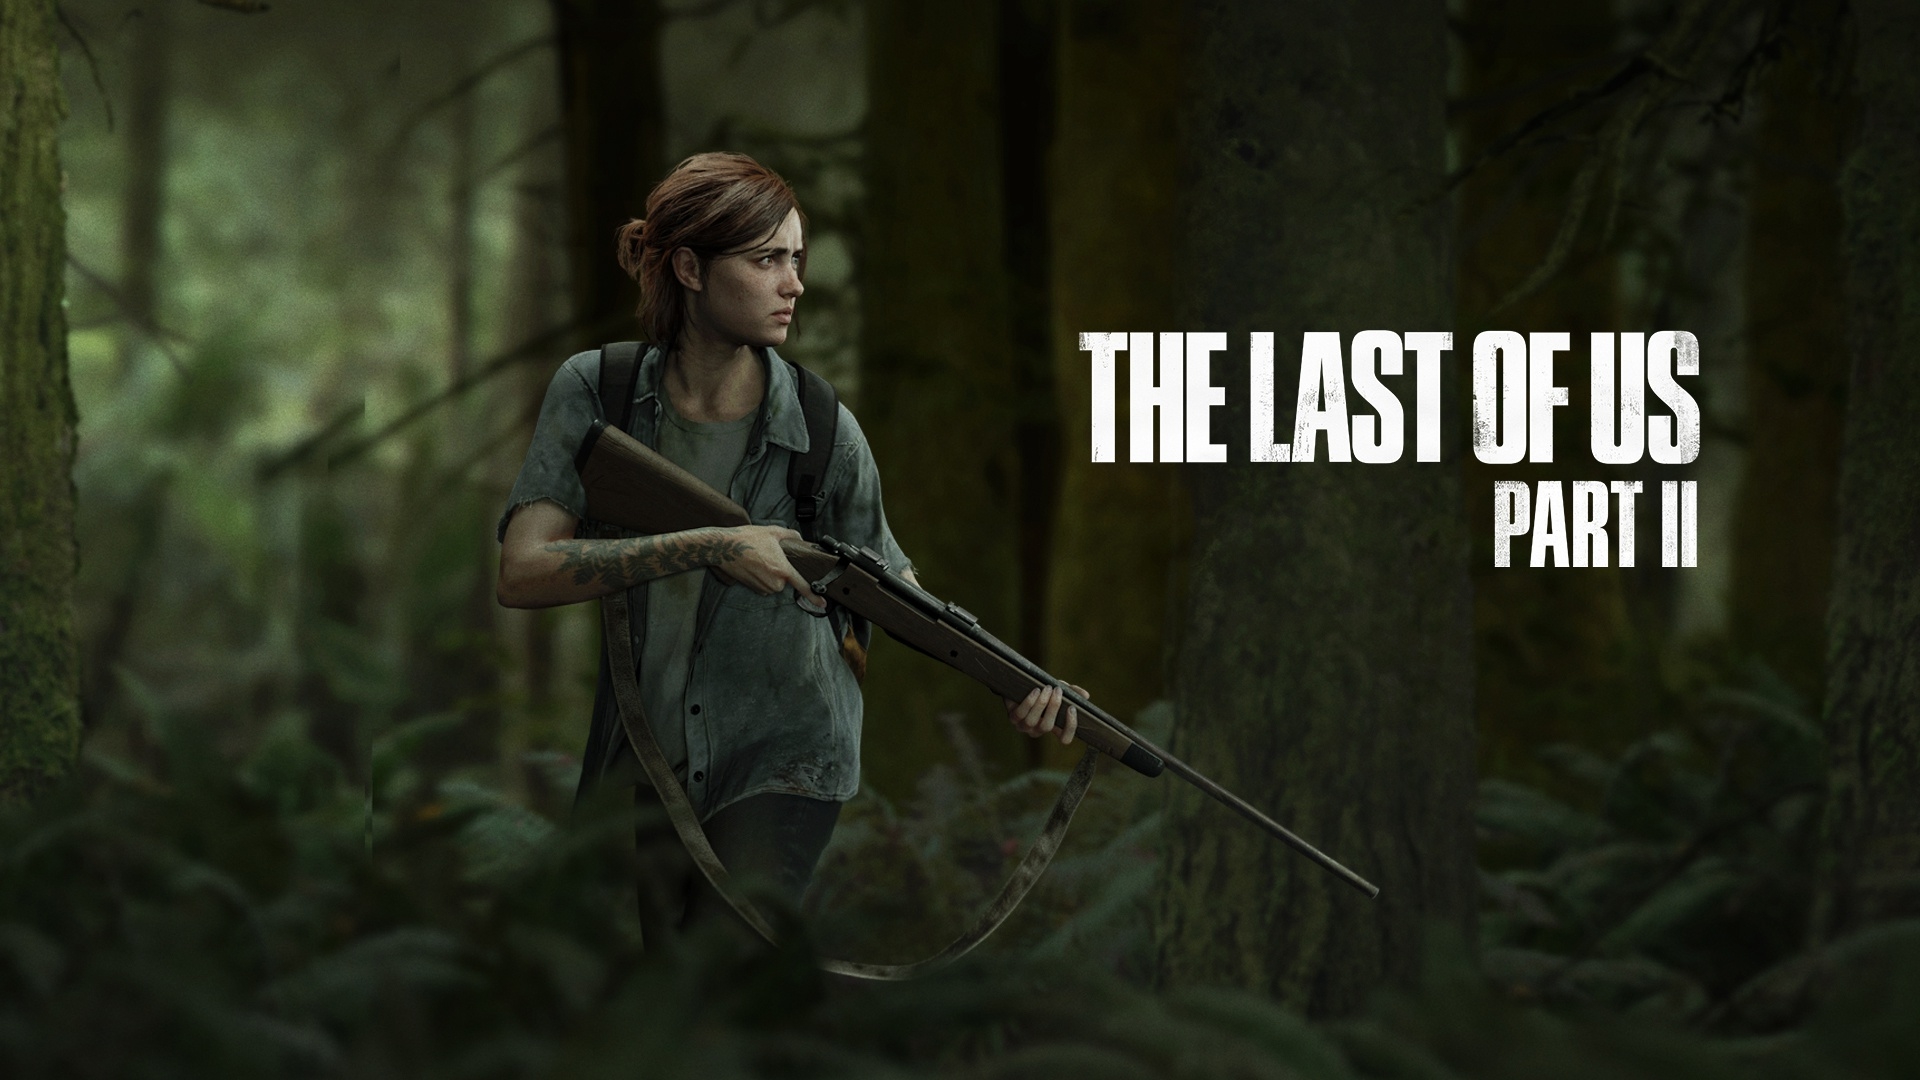  The Last  of Us  Part 2  PS5 Wallpaper  HD Games 4K  